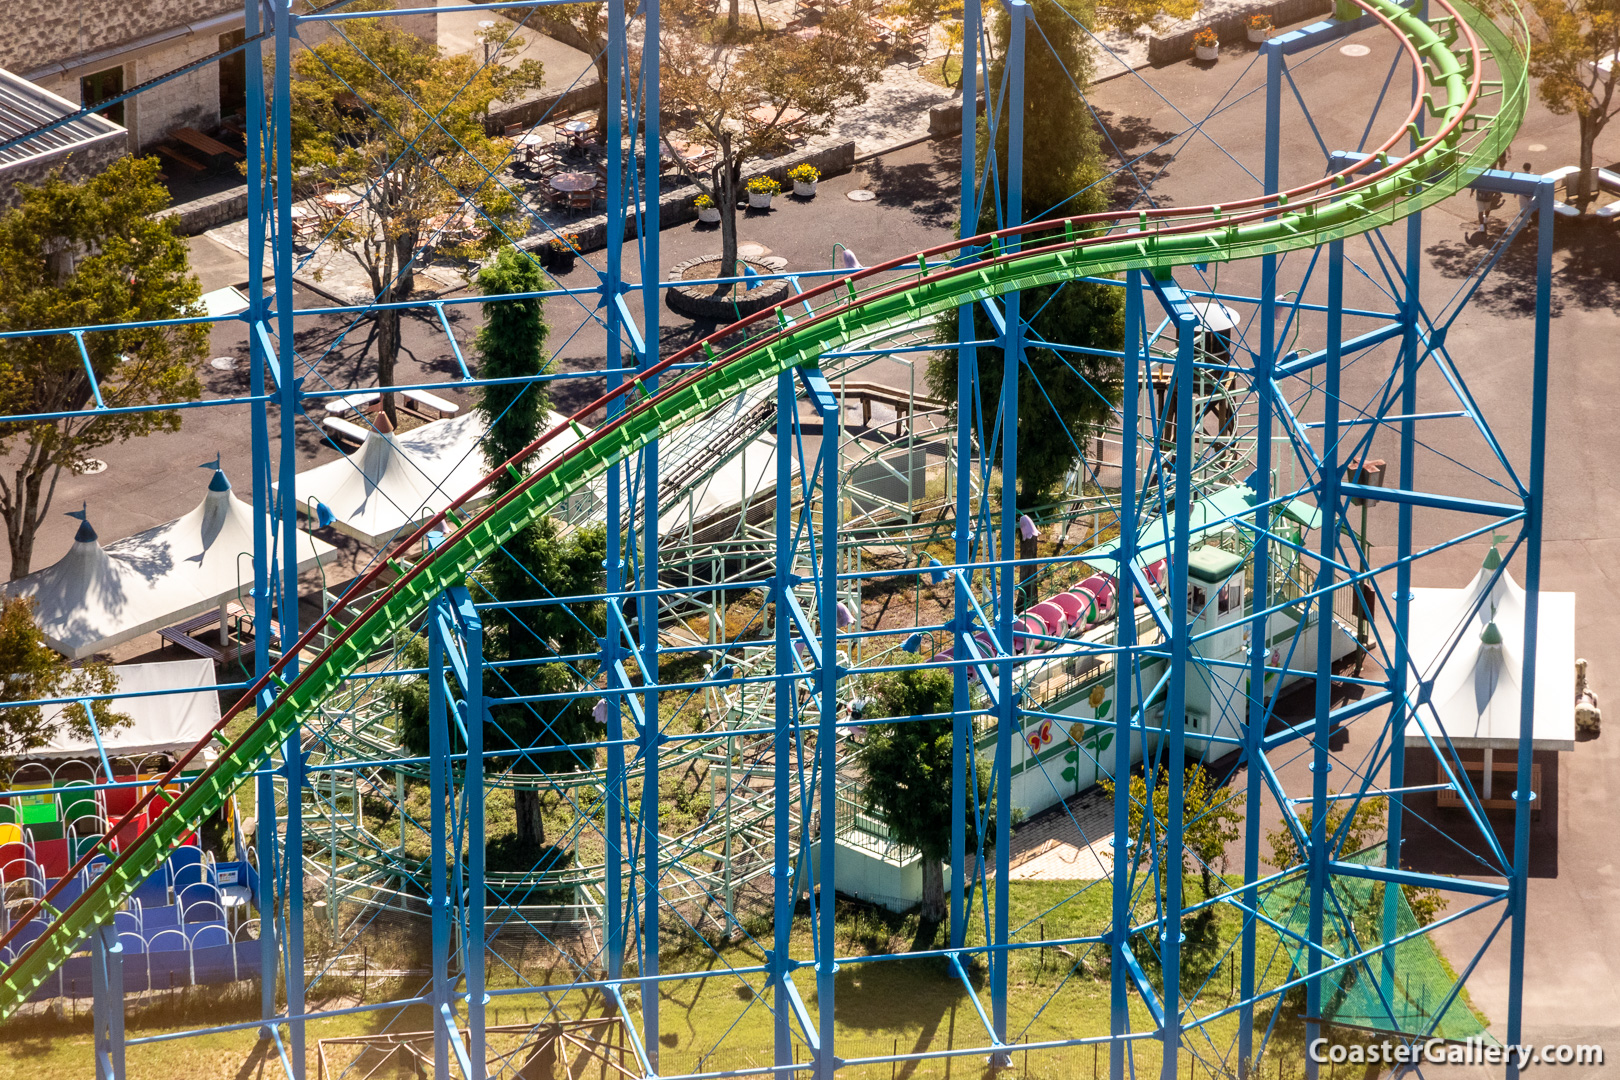 Imorinth roller coaster at Himeji Central Park